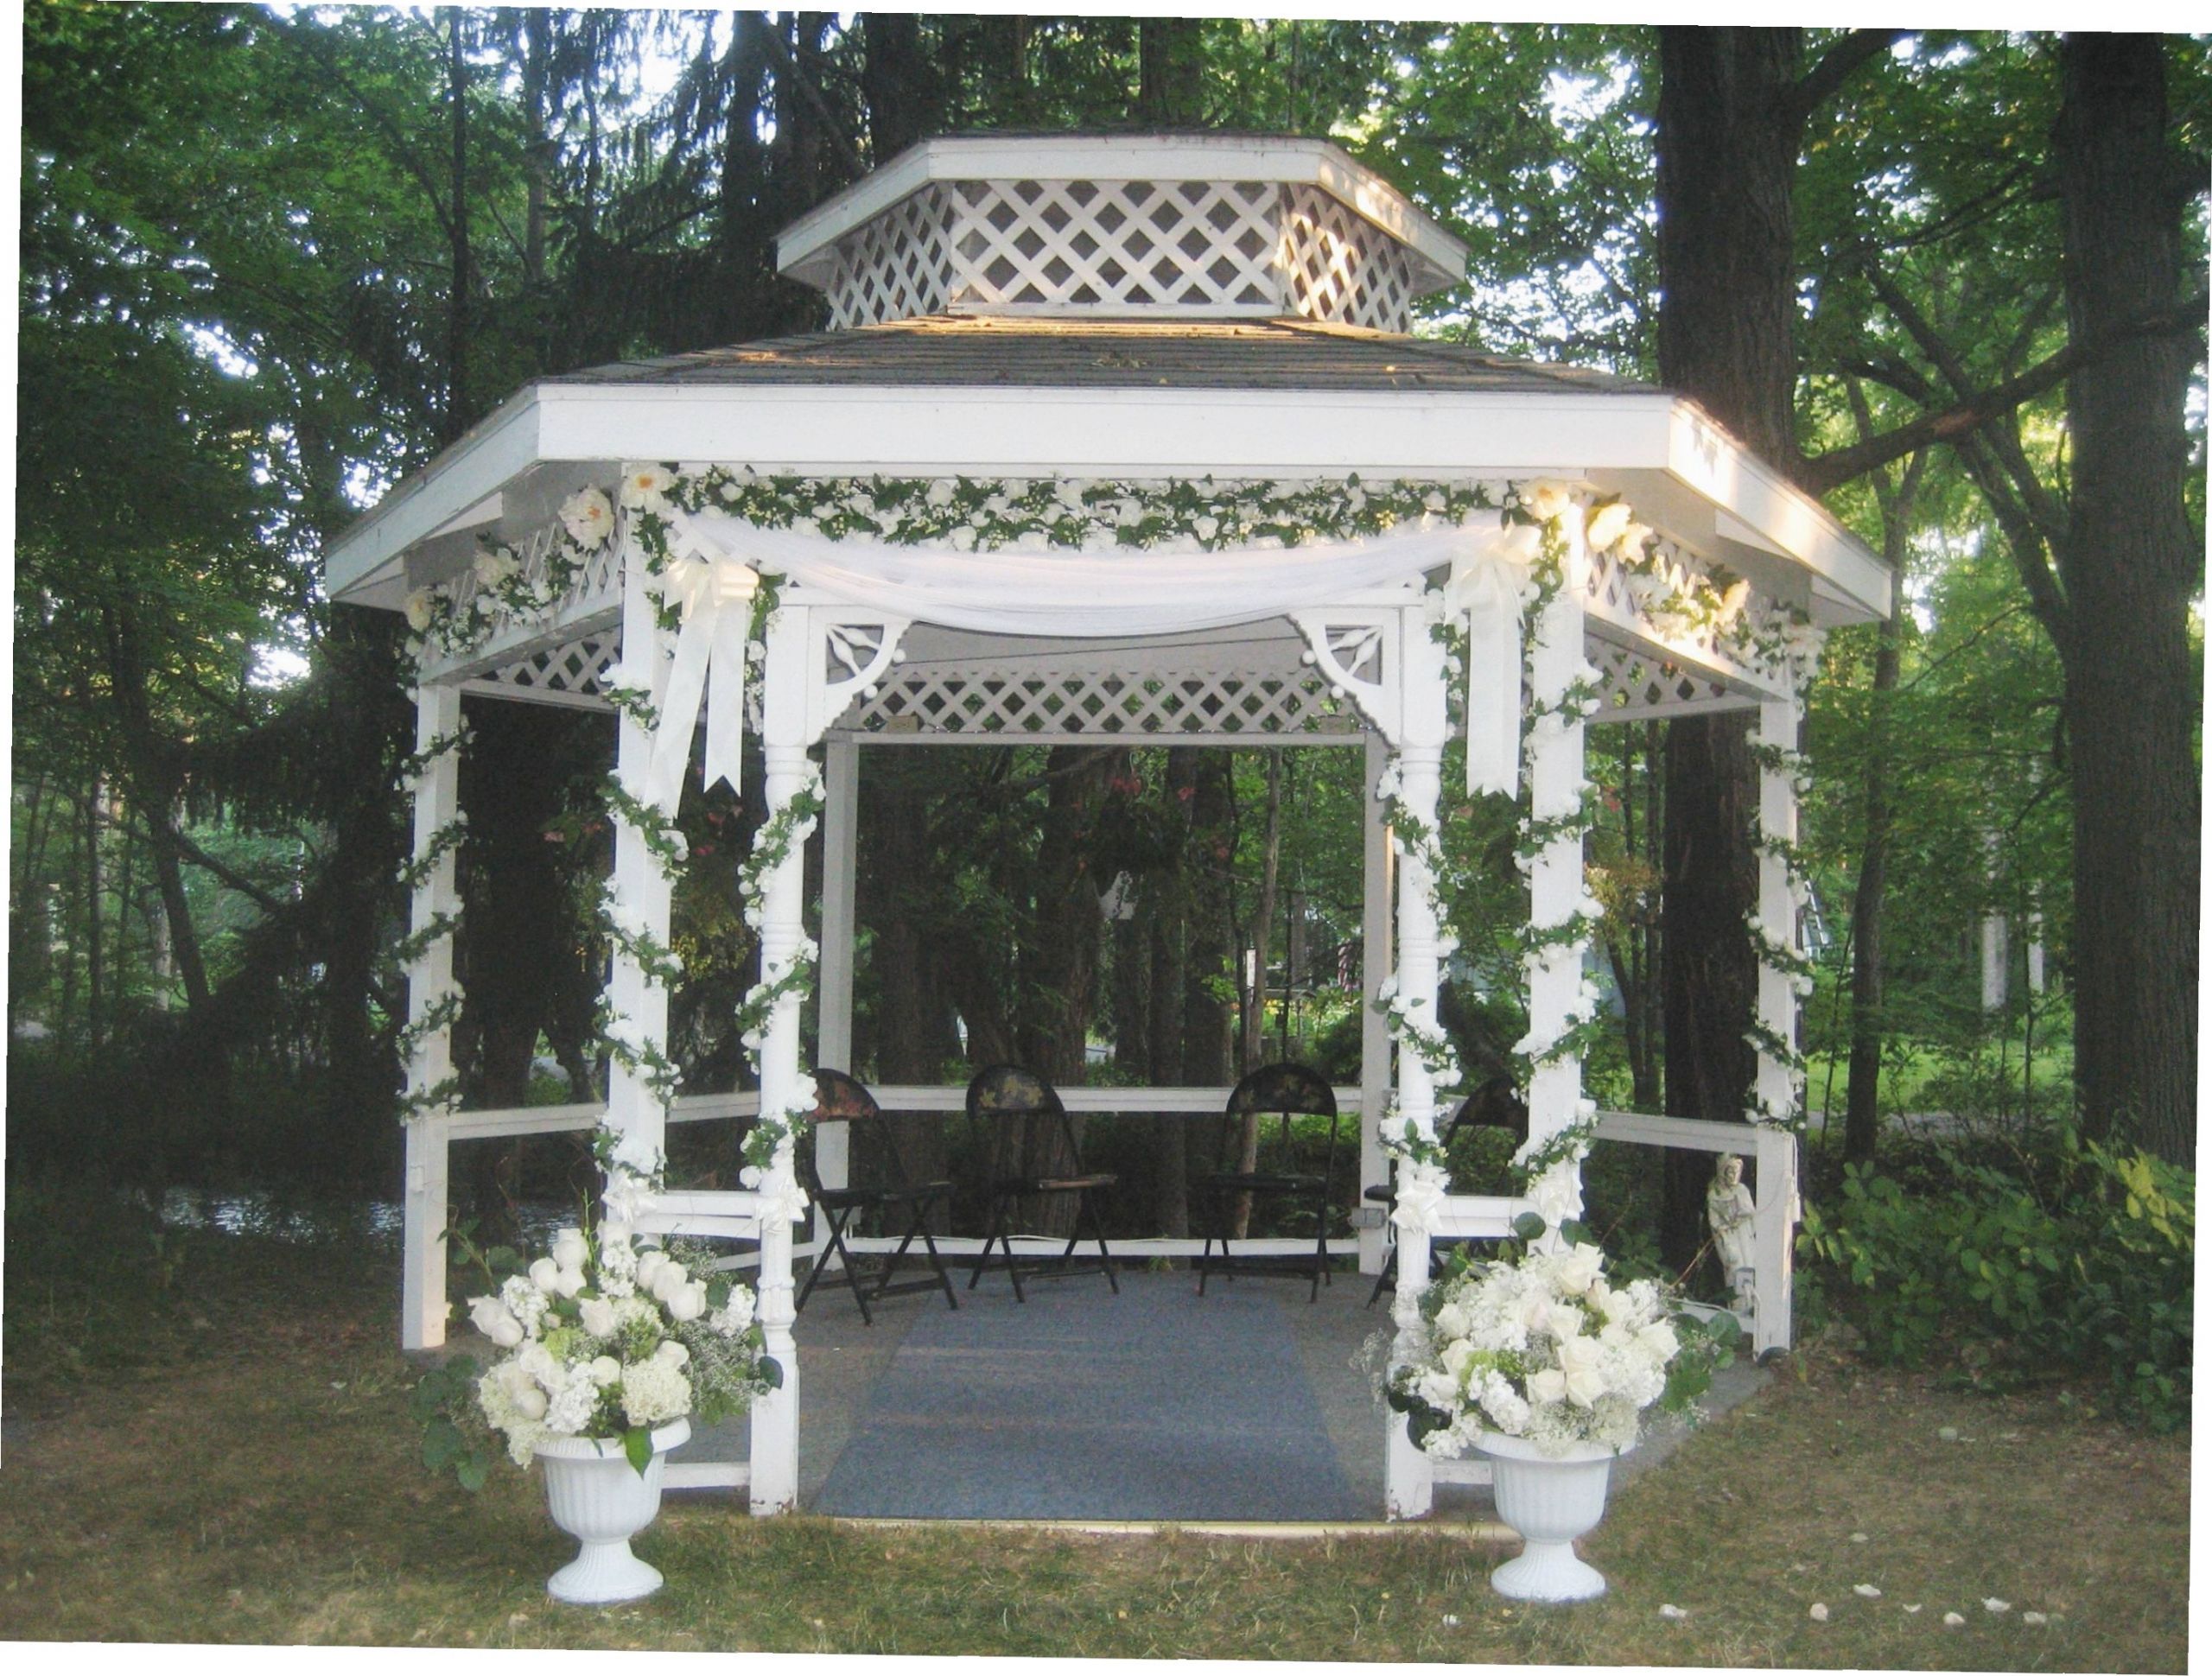 How To Decorate A Gazebo For A Wedding
 Whimsical Elegant Tea Party Wedding Gazebo Wedding